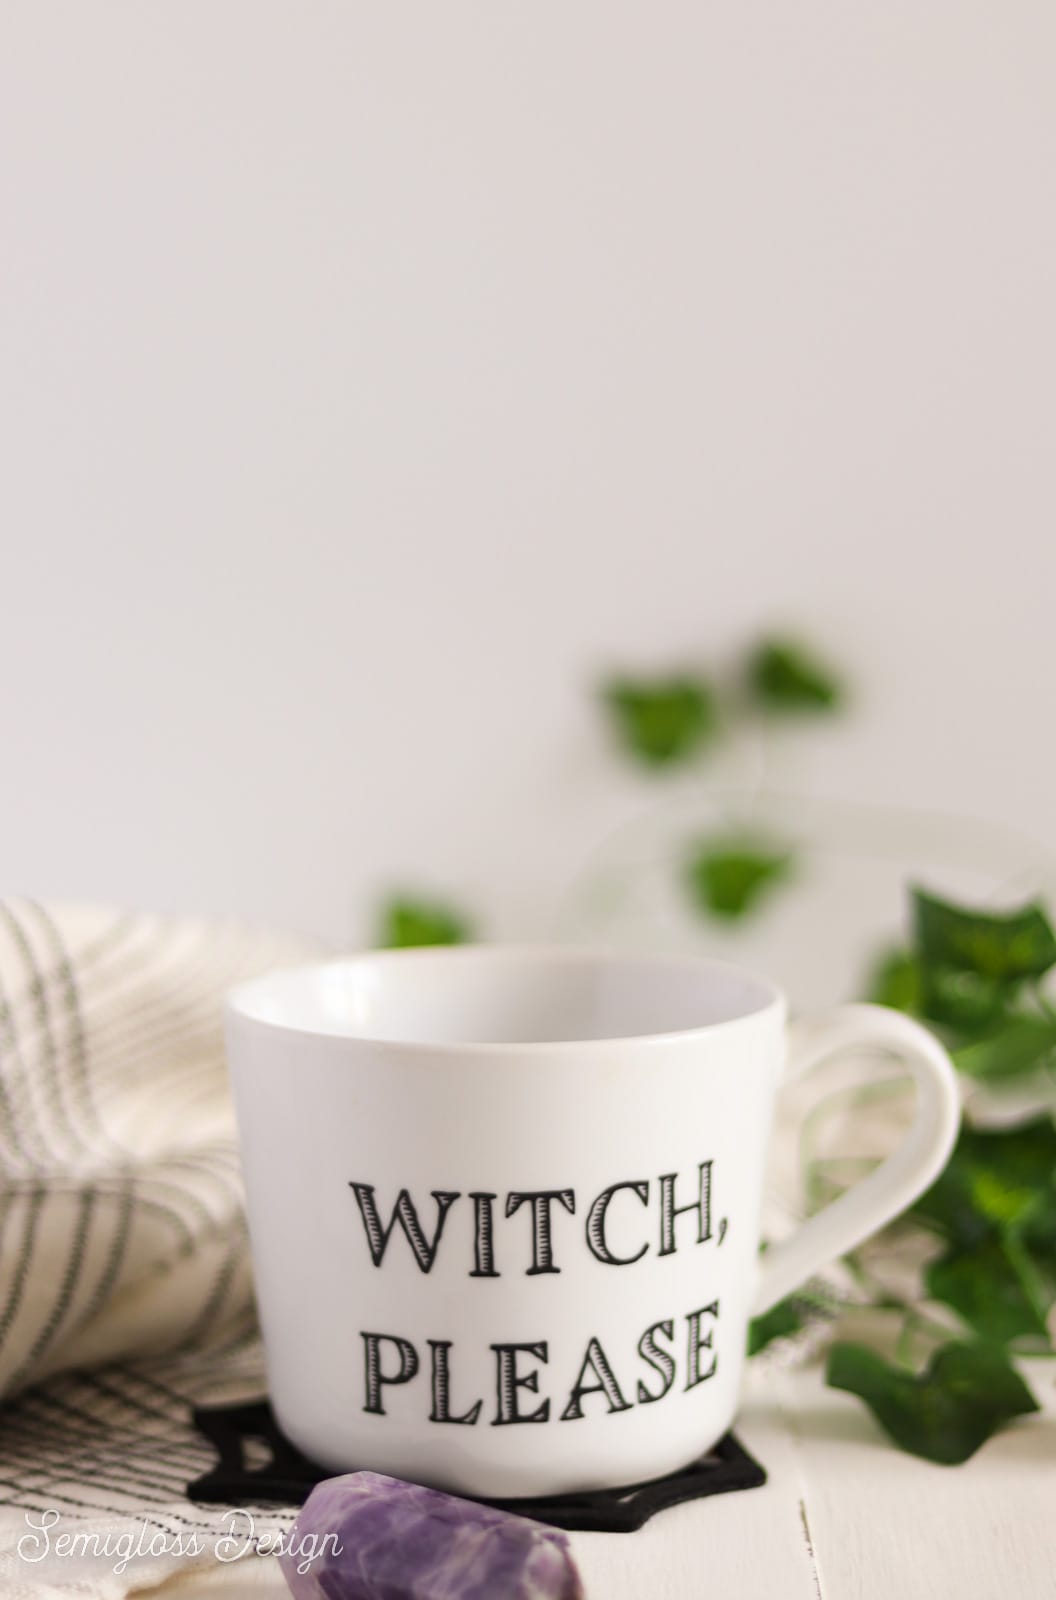 "witch, please" mug